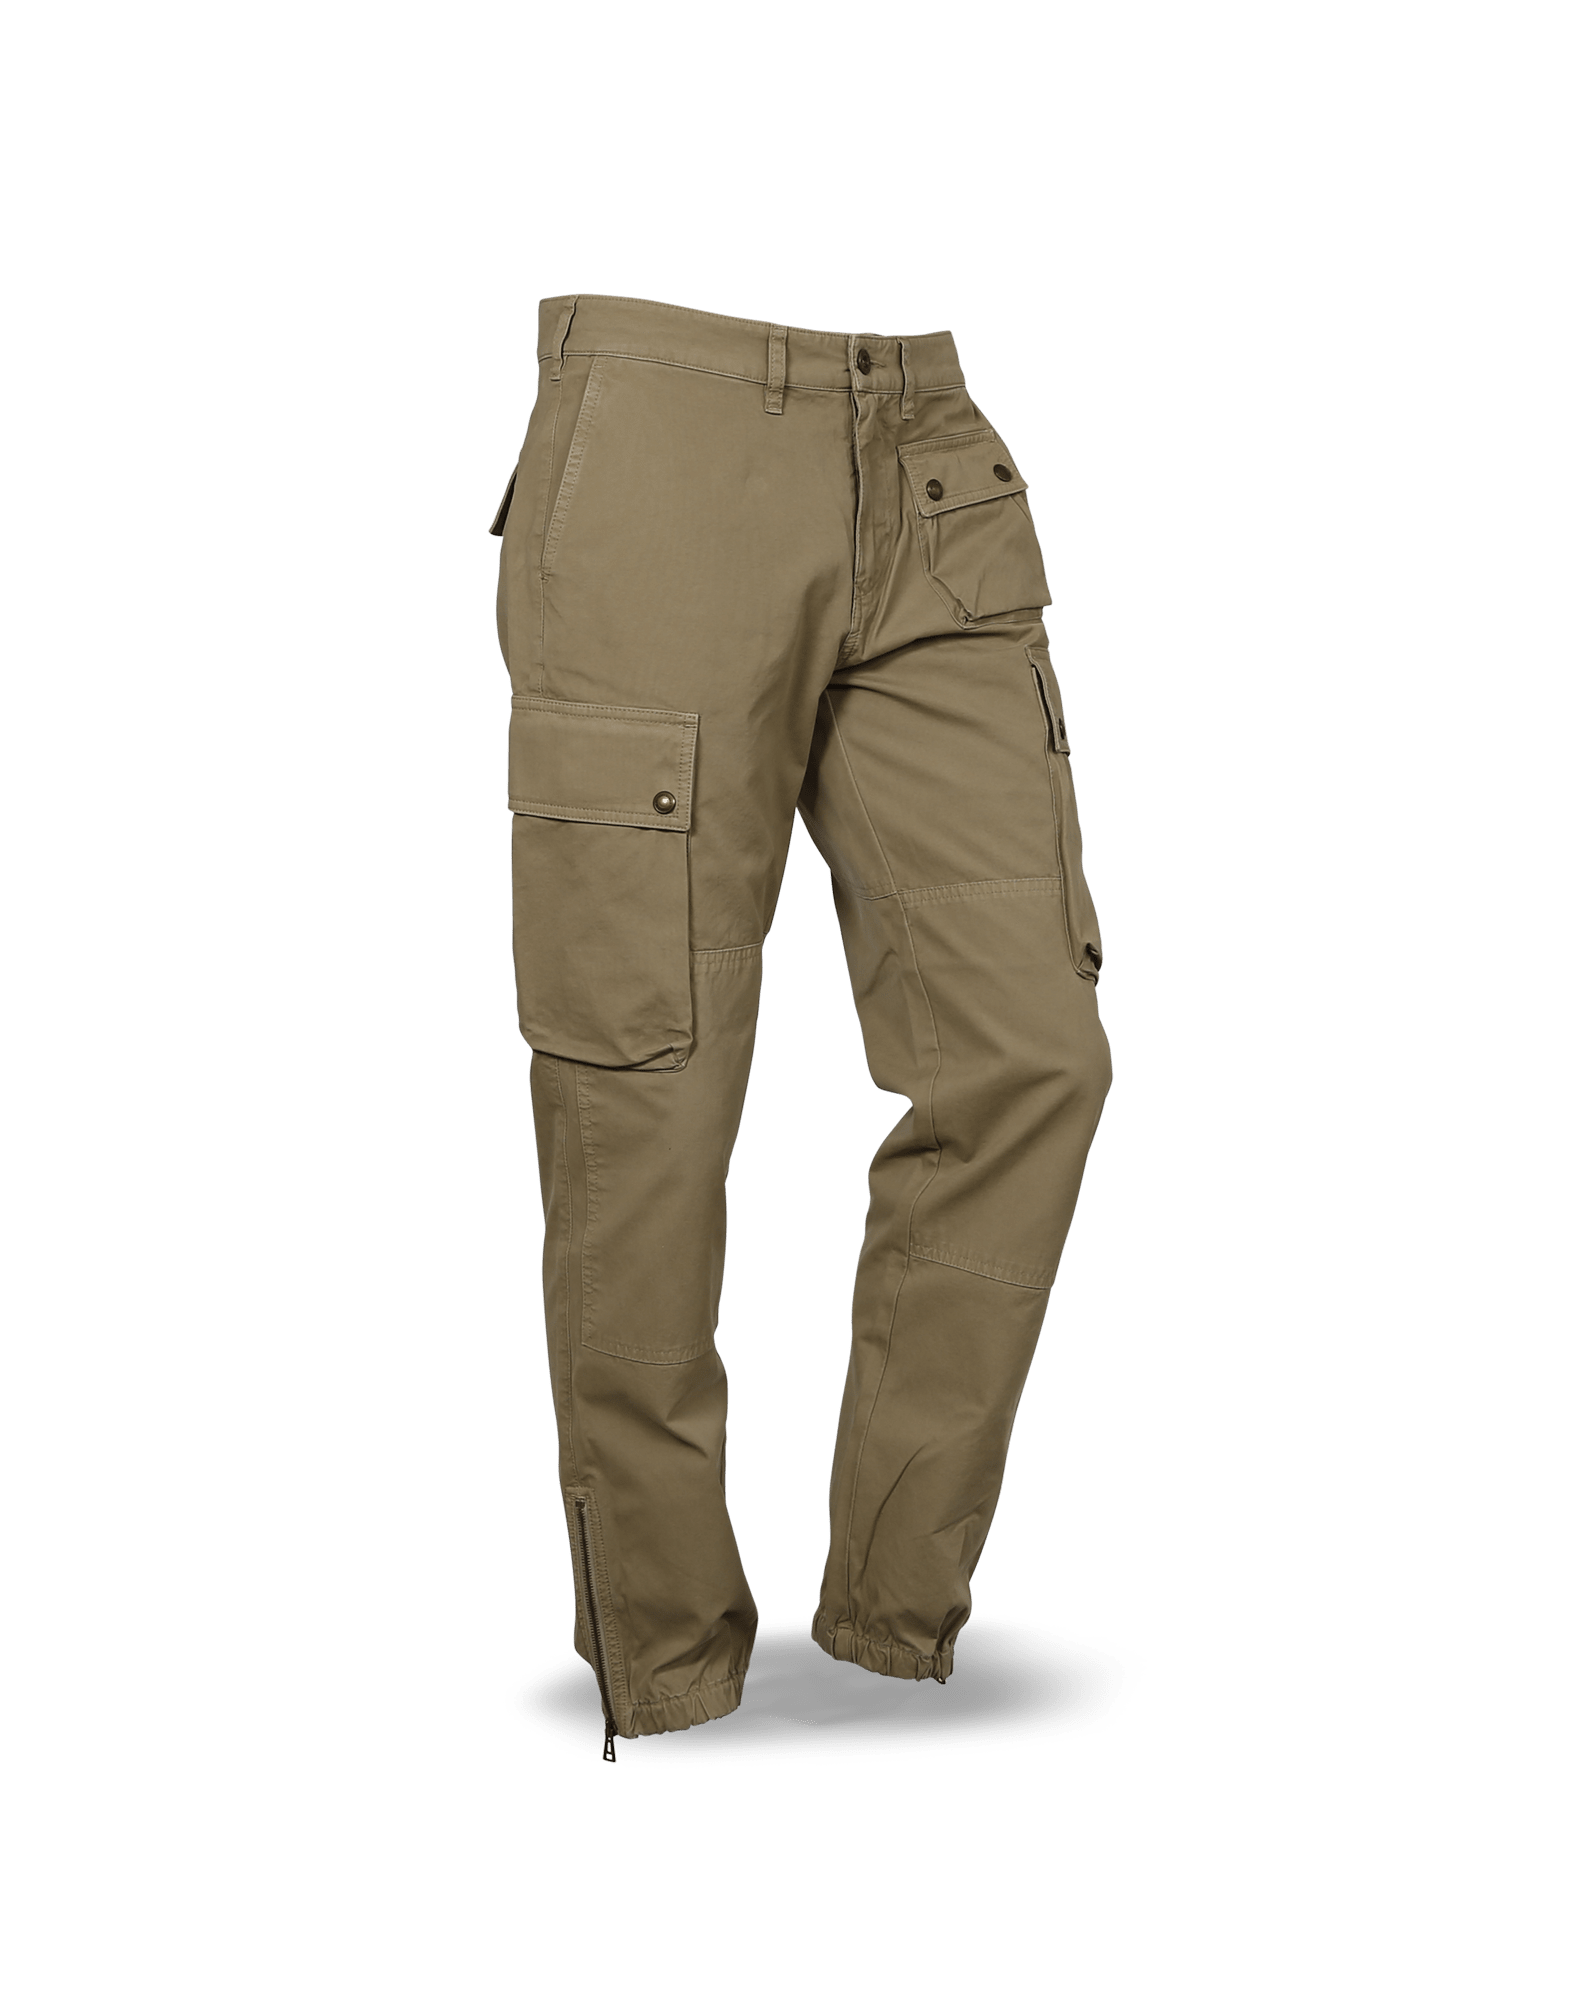 Belstaff Trialmaster Cargo Pants for men in tarp khaki | Gotlands Fashion